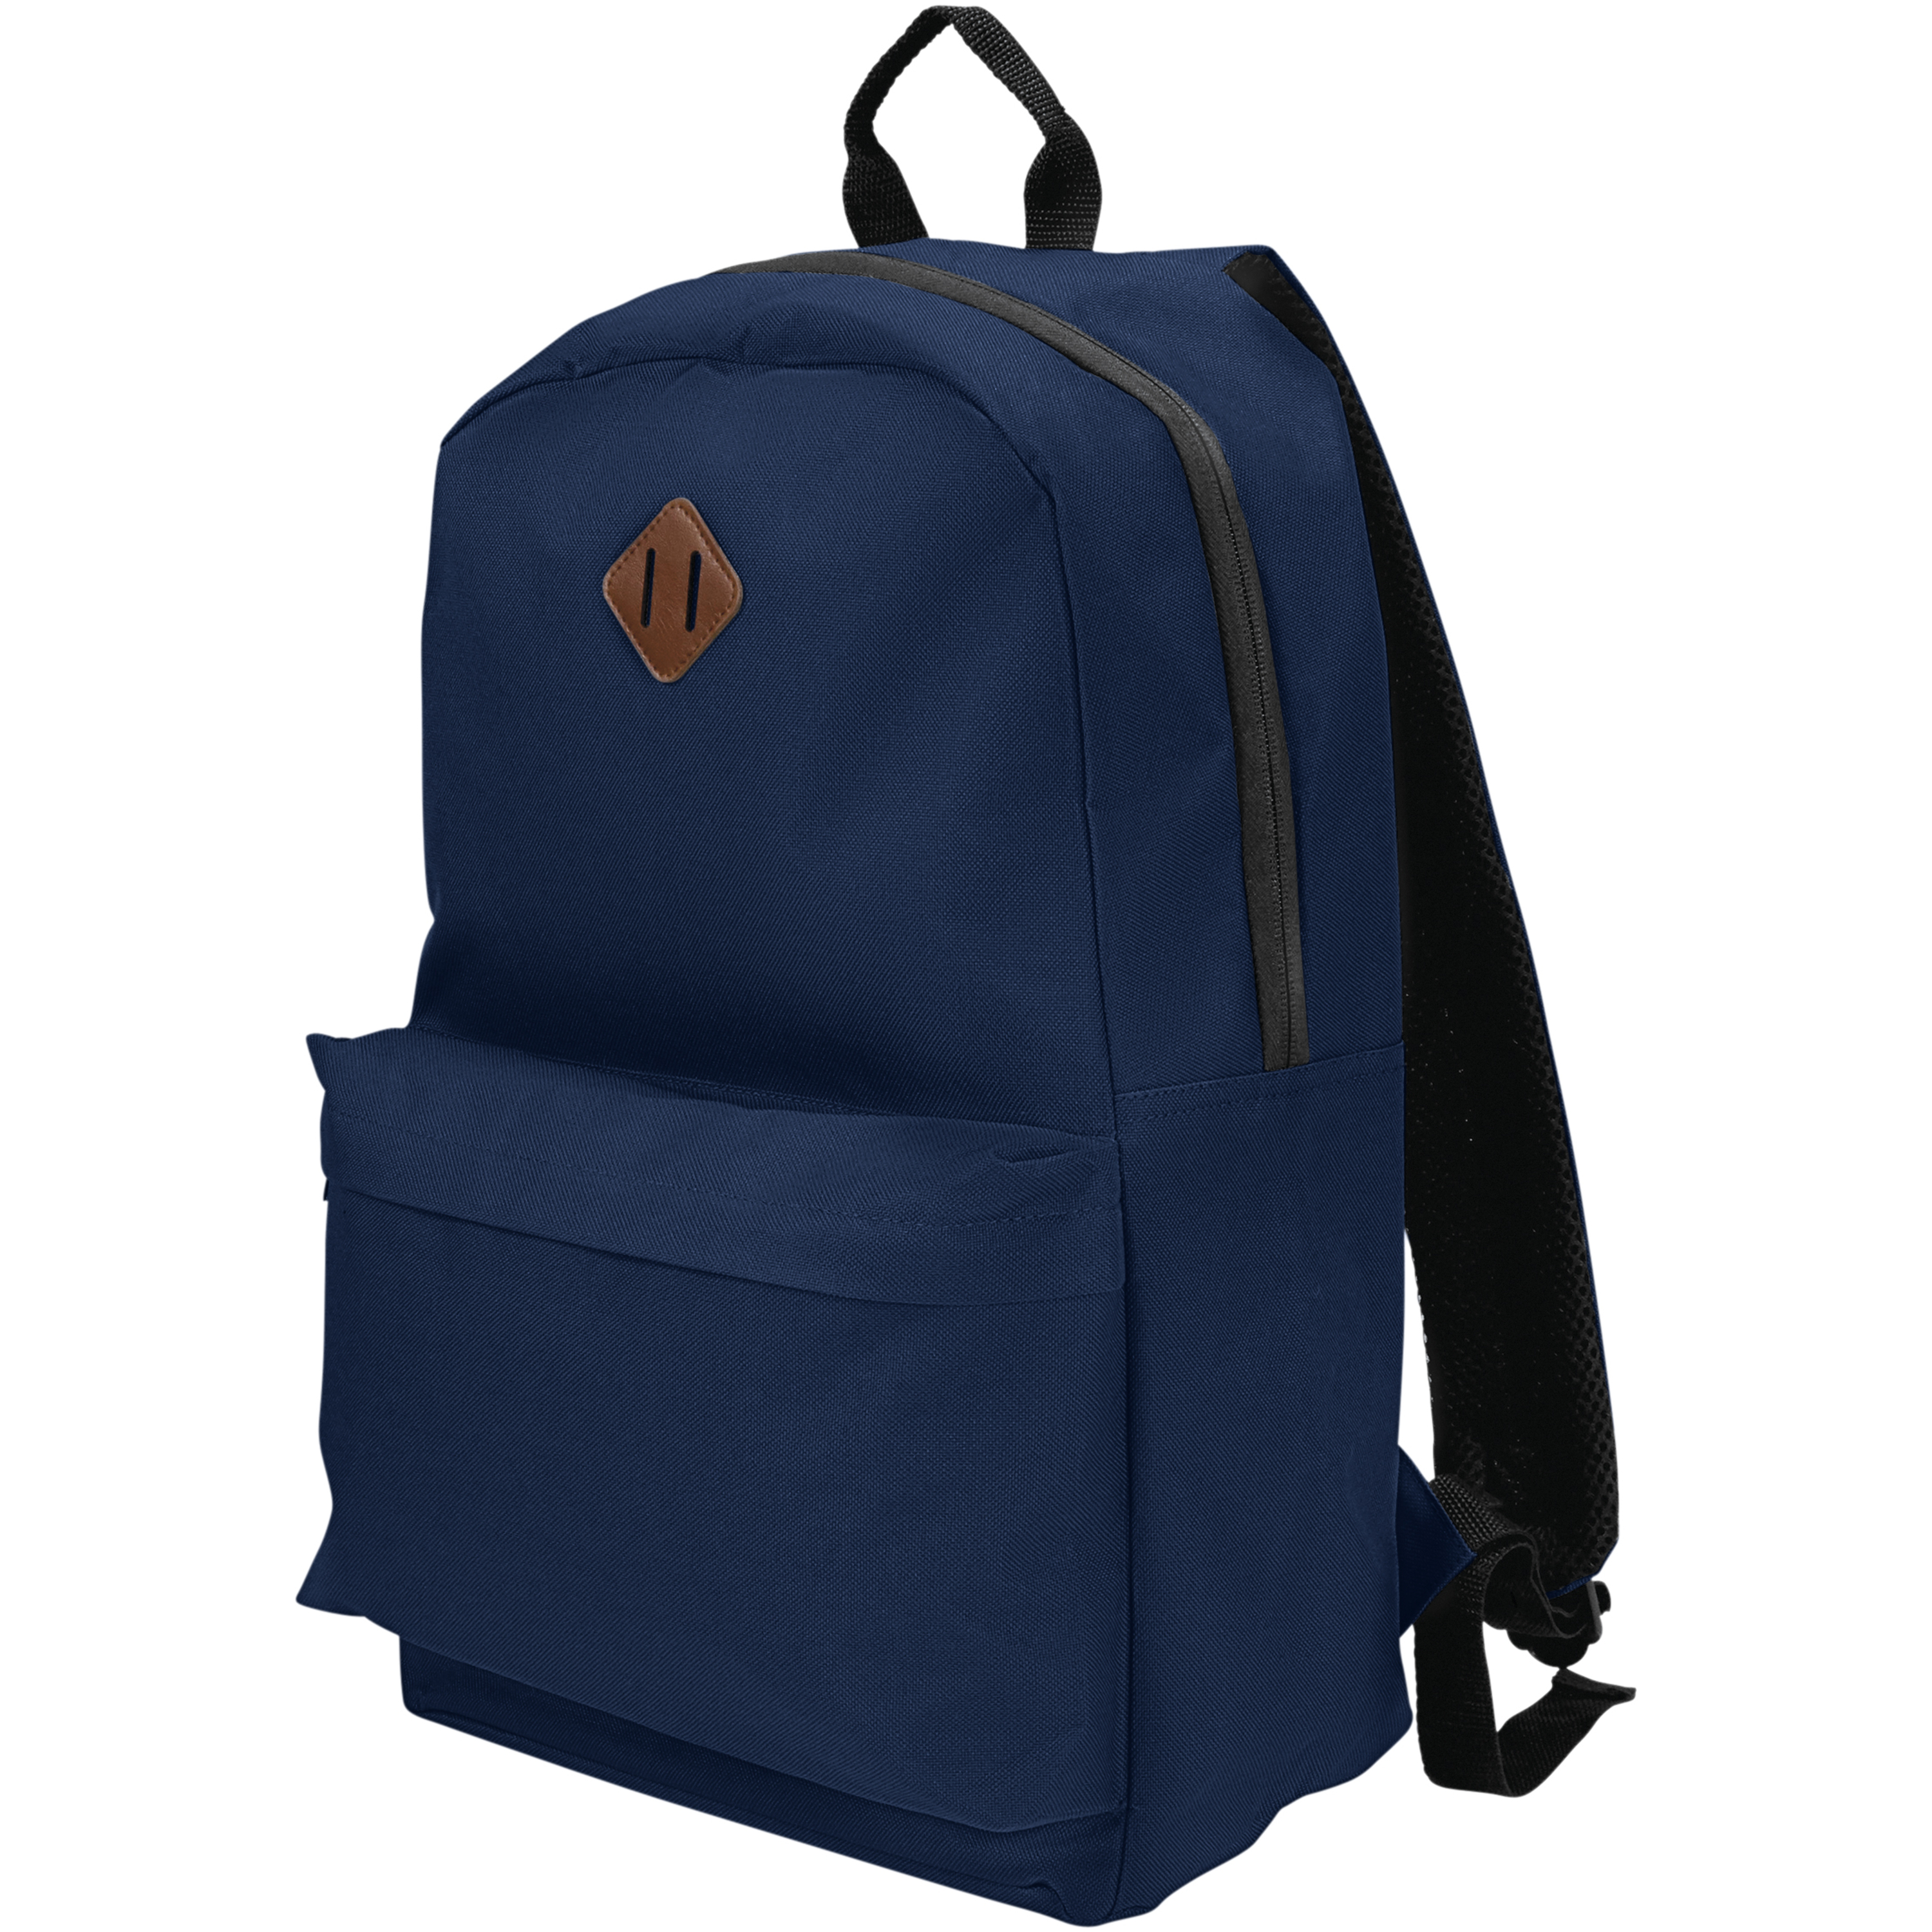 Stratta 15" laptop backpack 15L